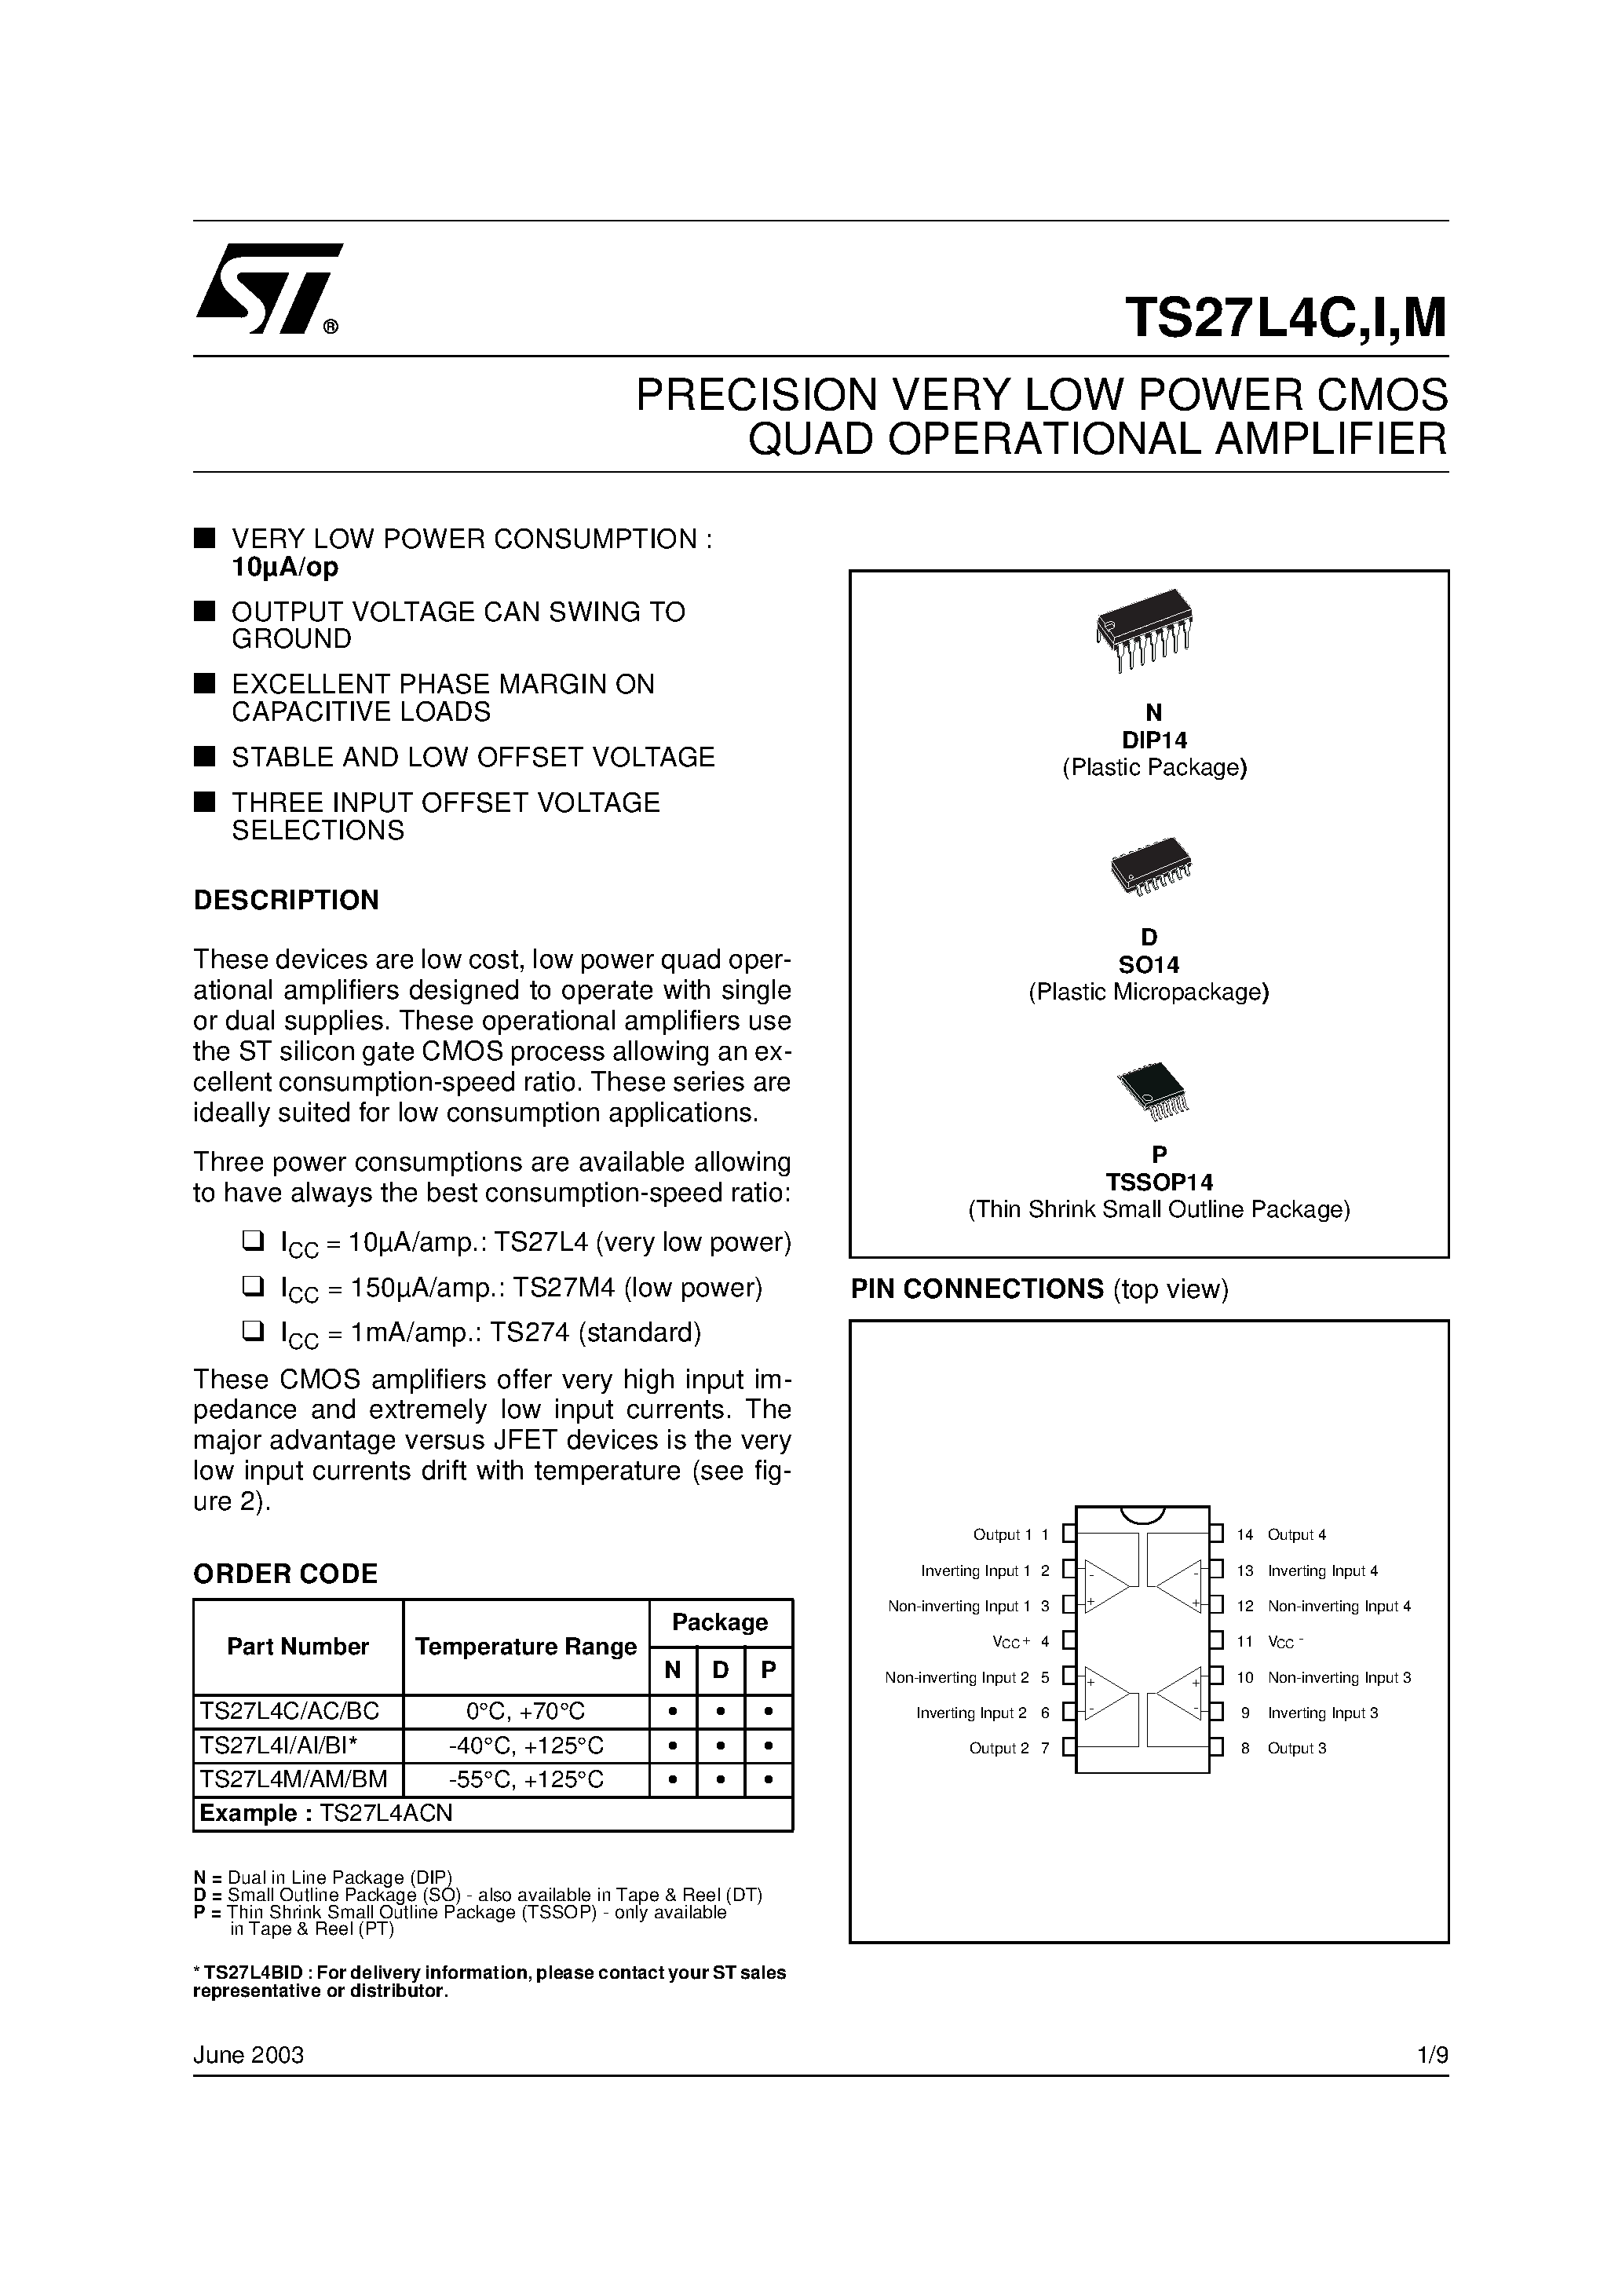 Datasheet TS27L4BI - PRECISION VERY LOW POWER CMOS QUAD OPERATIONAL AMPLIFIER page 1